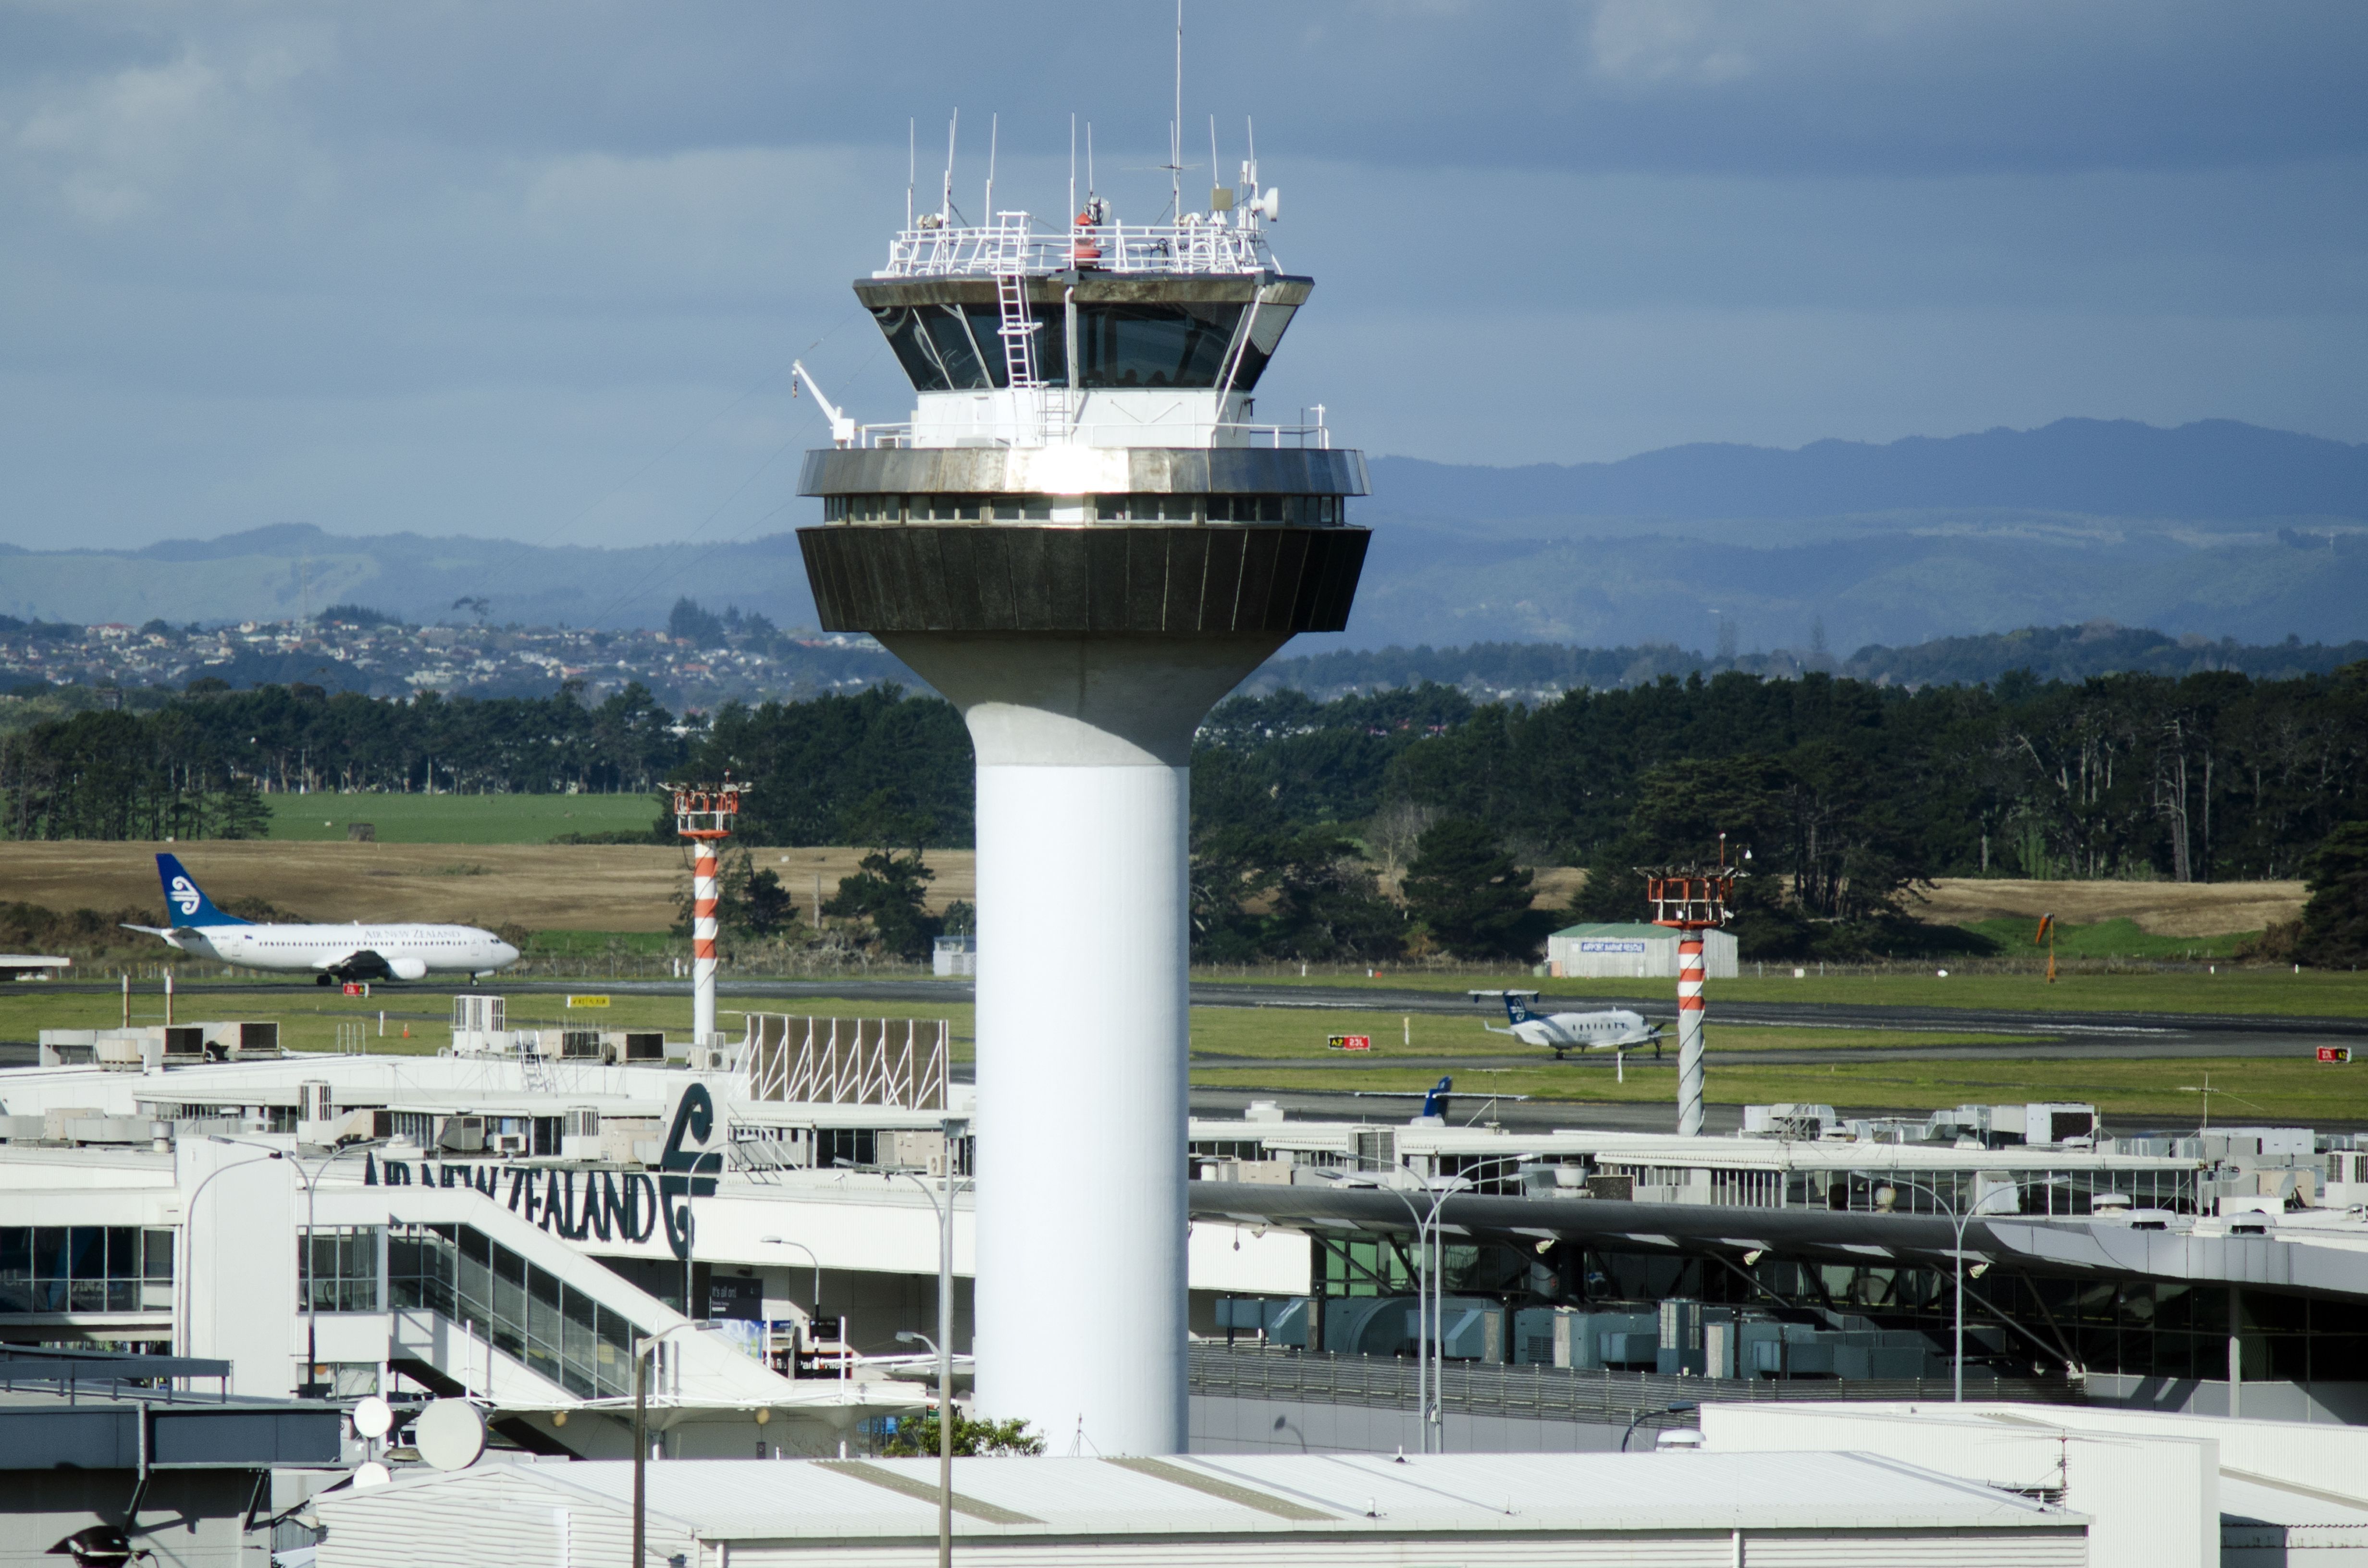 Airport ATC Control Tower